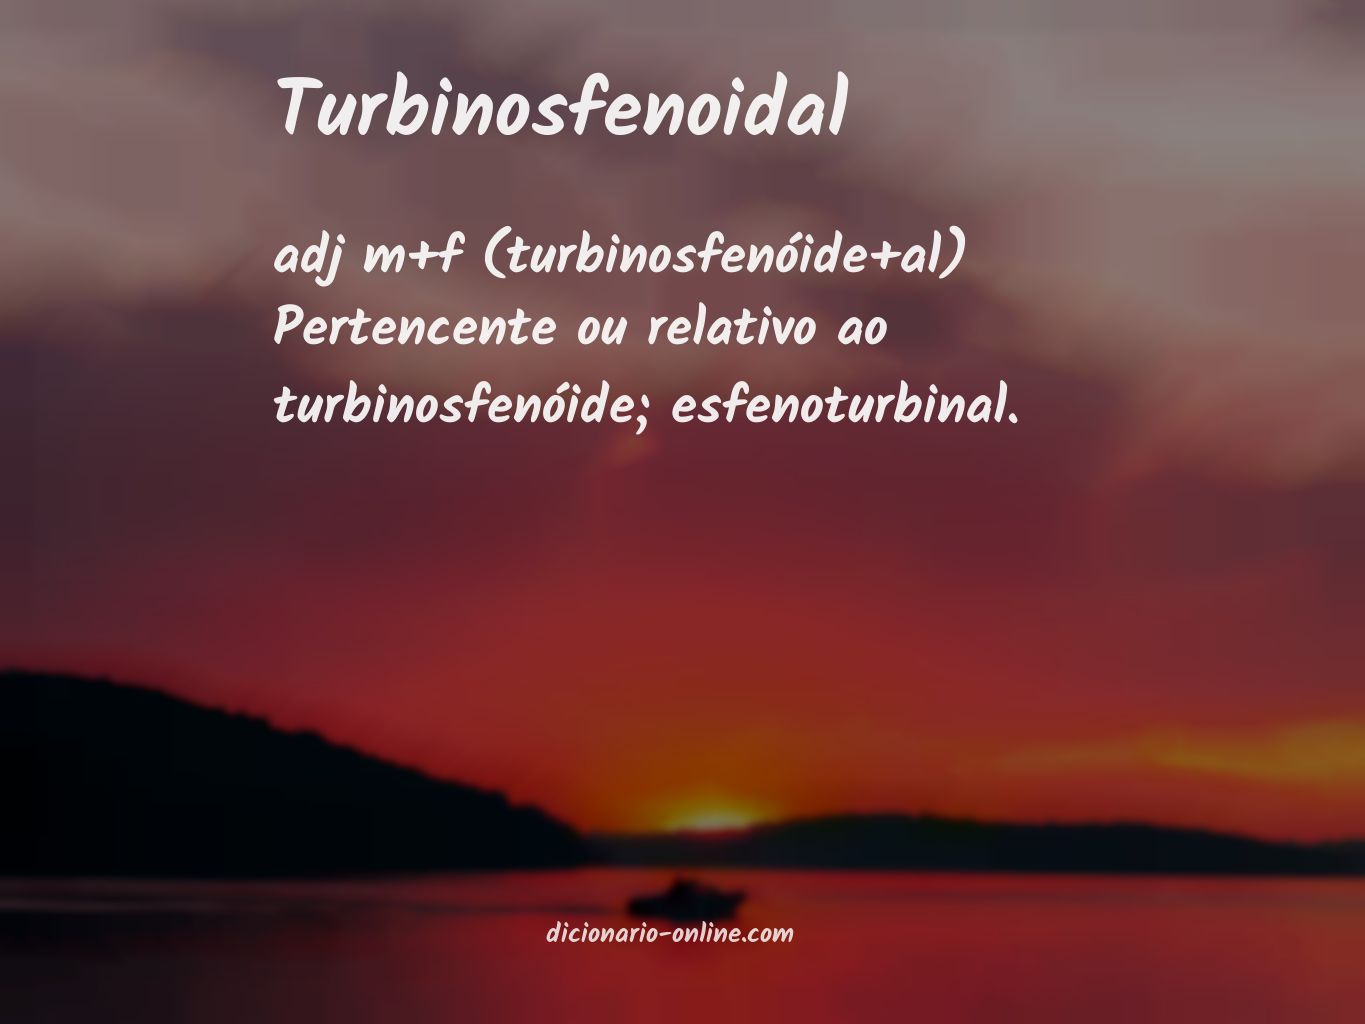 Significado de turbinosfenoidal